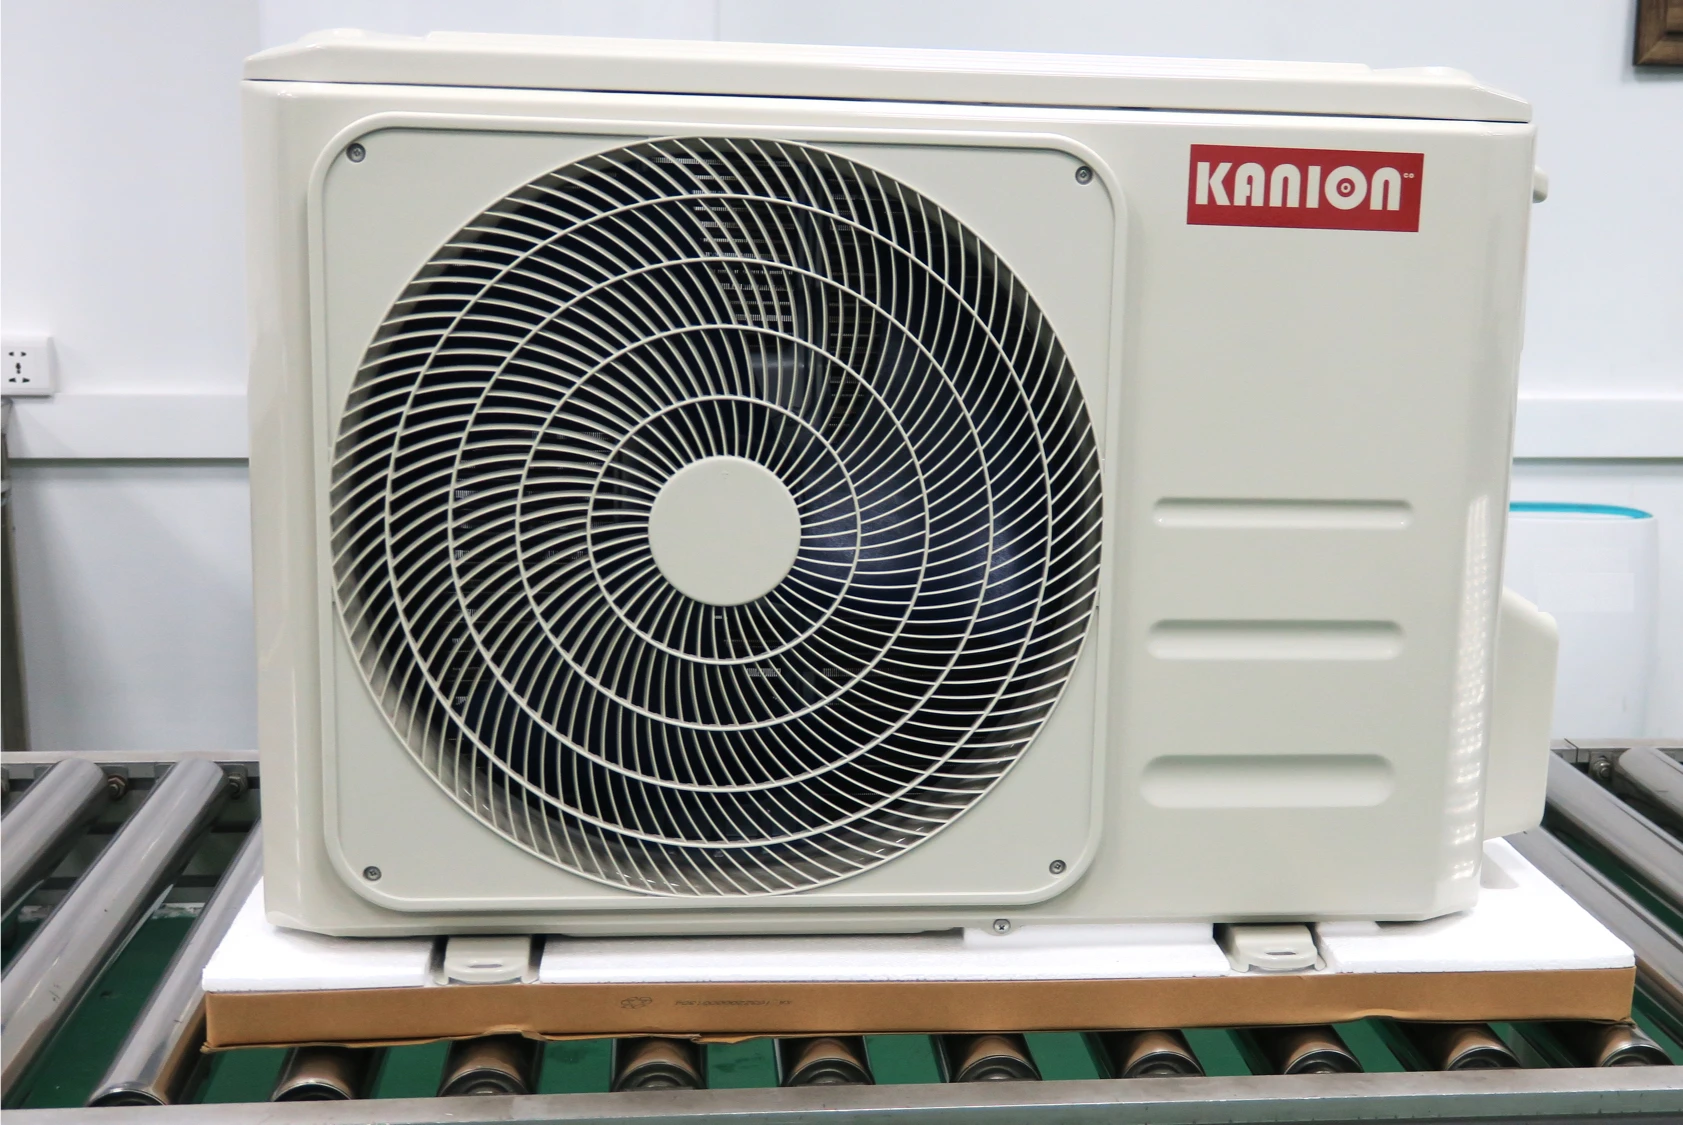 Kanionco Inverter 3 star 12000 btu air conditioners